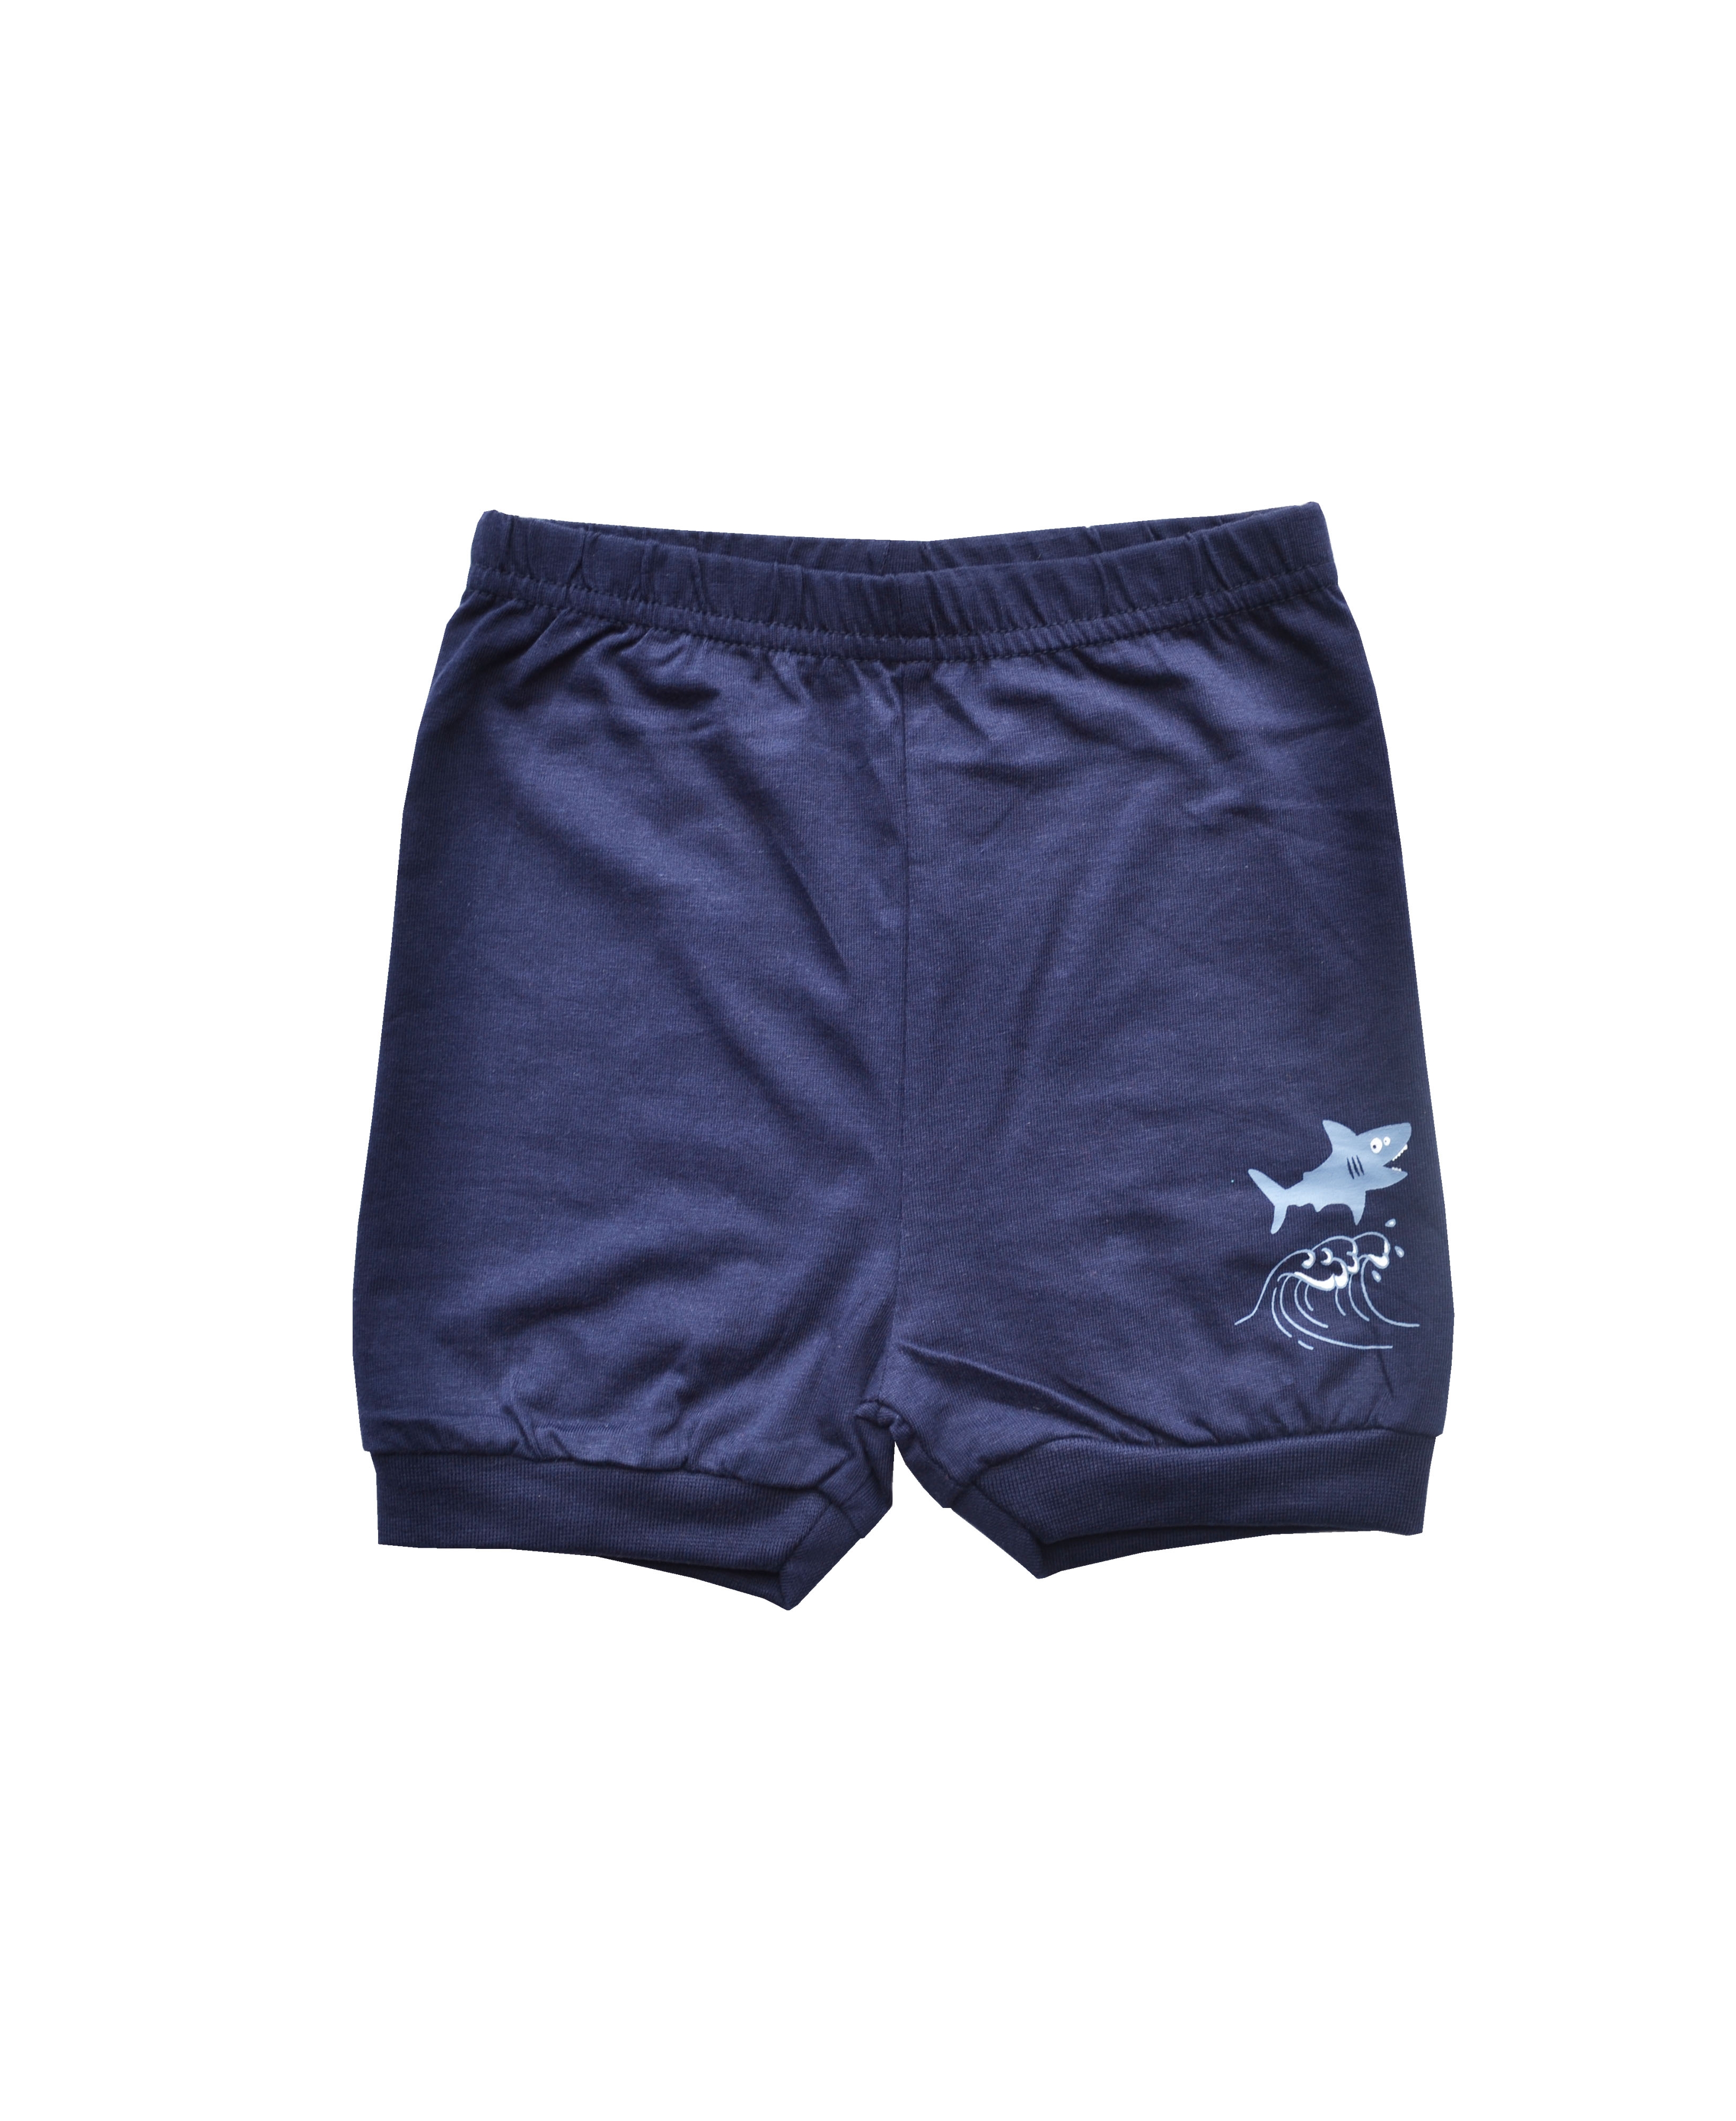 Shark Print On Navy Boys Short (100% Cotton Jersey)